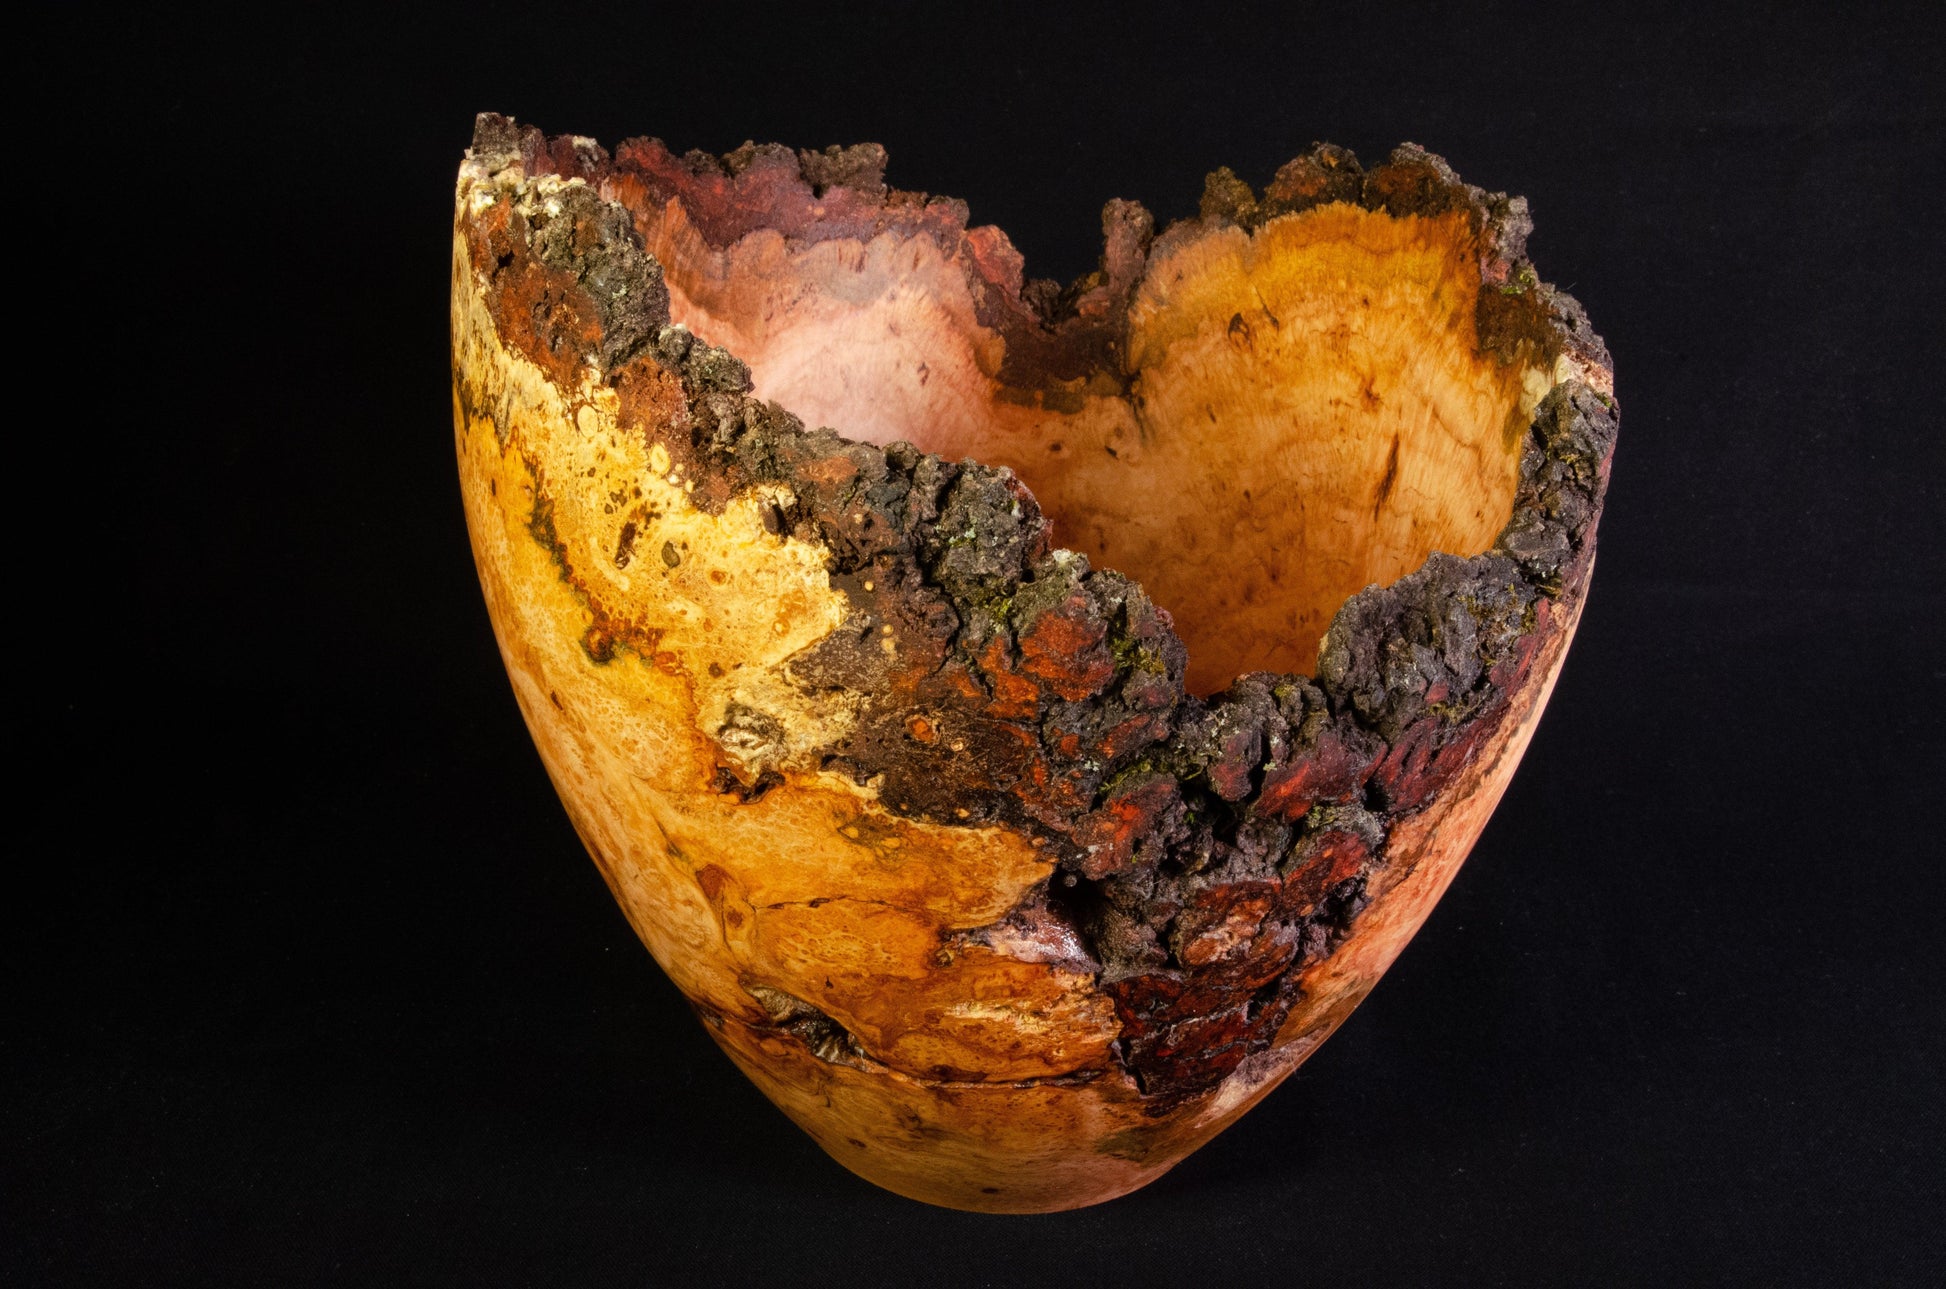 Medium live edge cherry burl bowl - Rare Earth Bowls